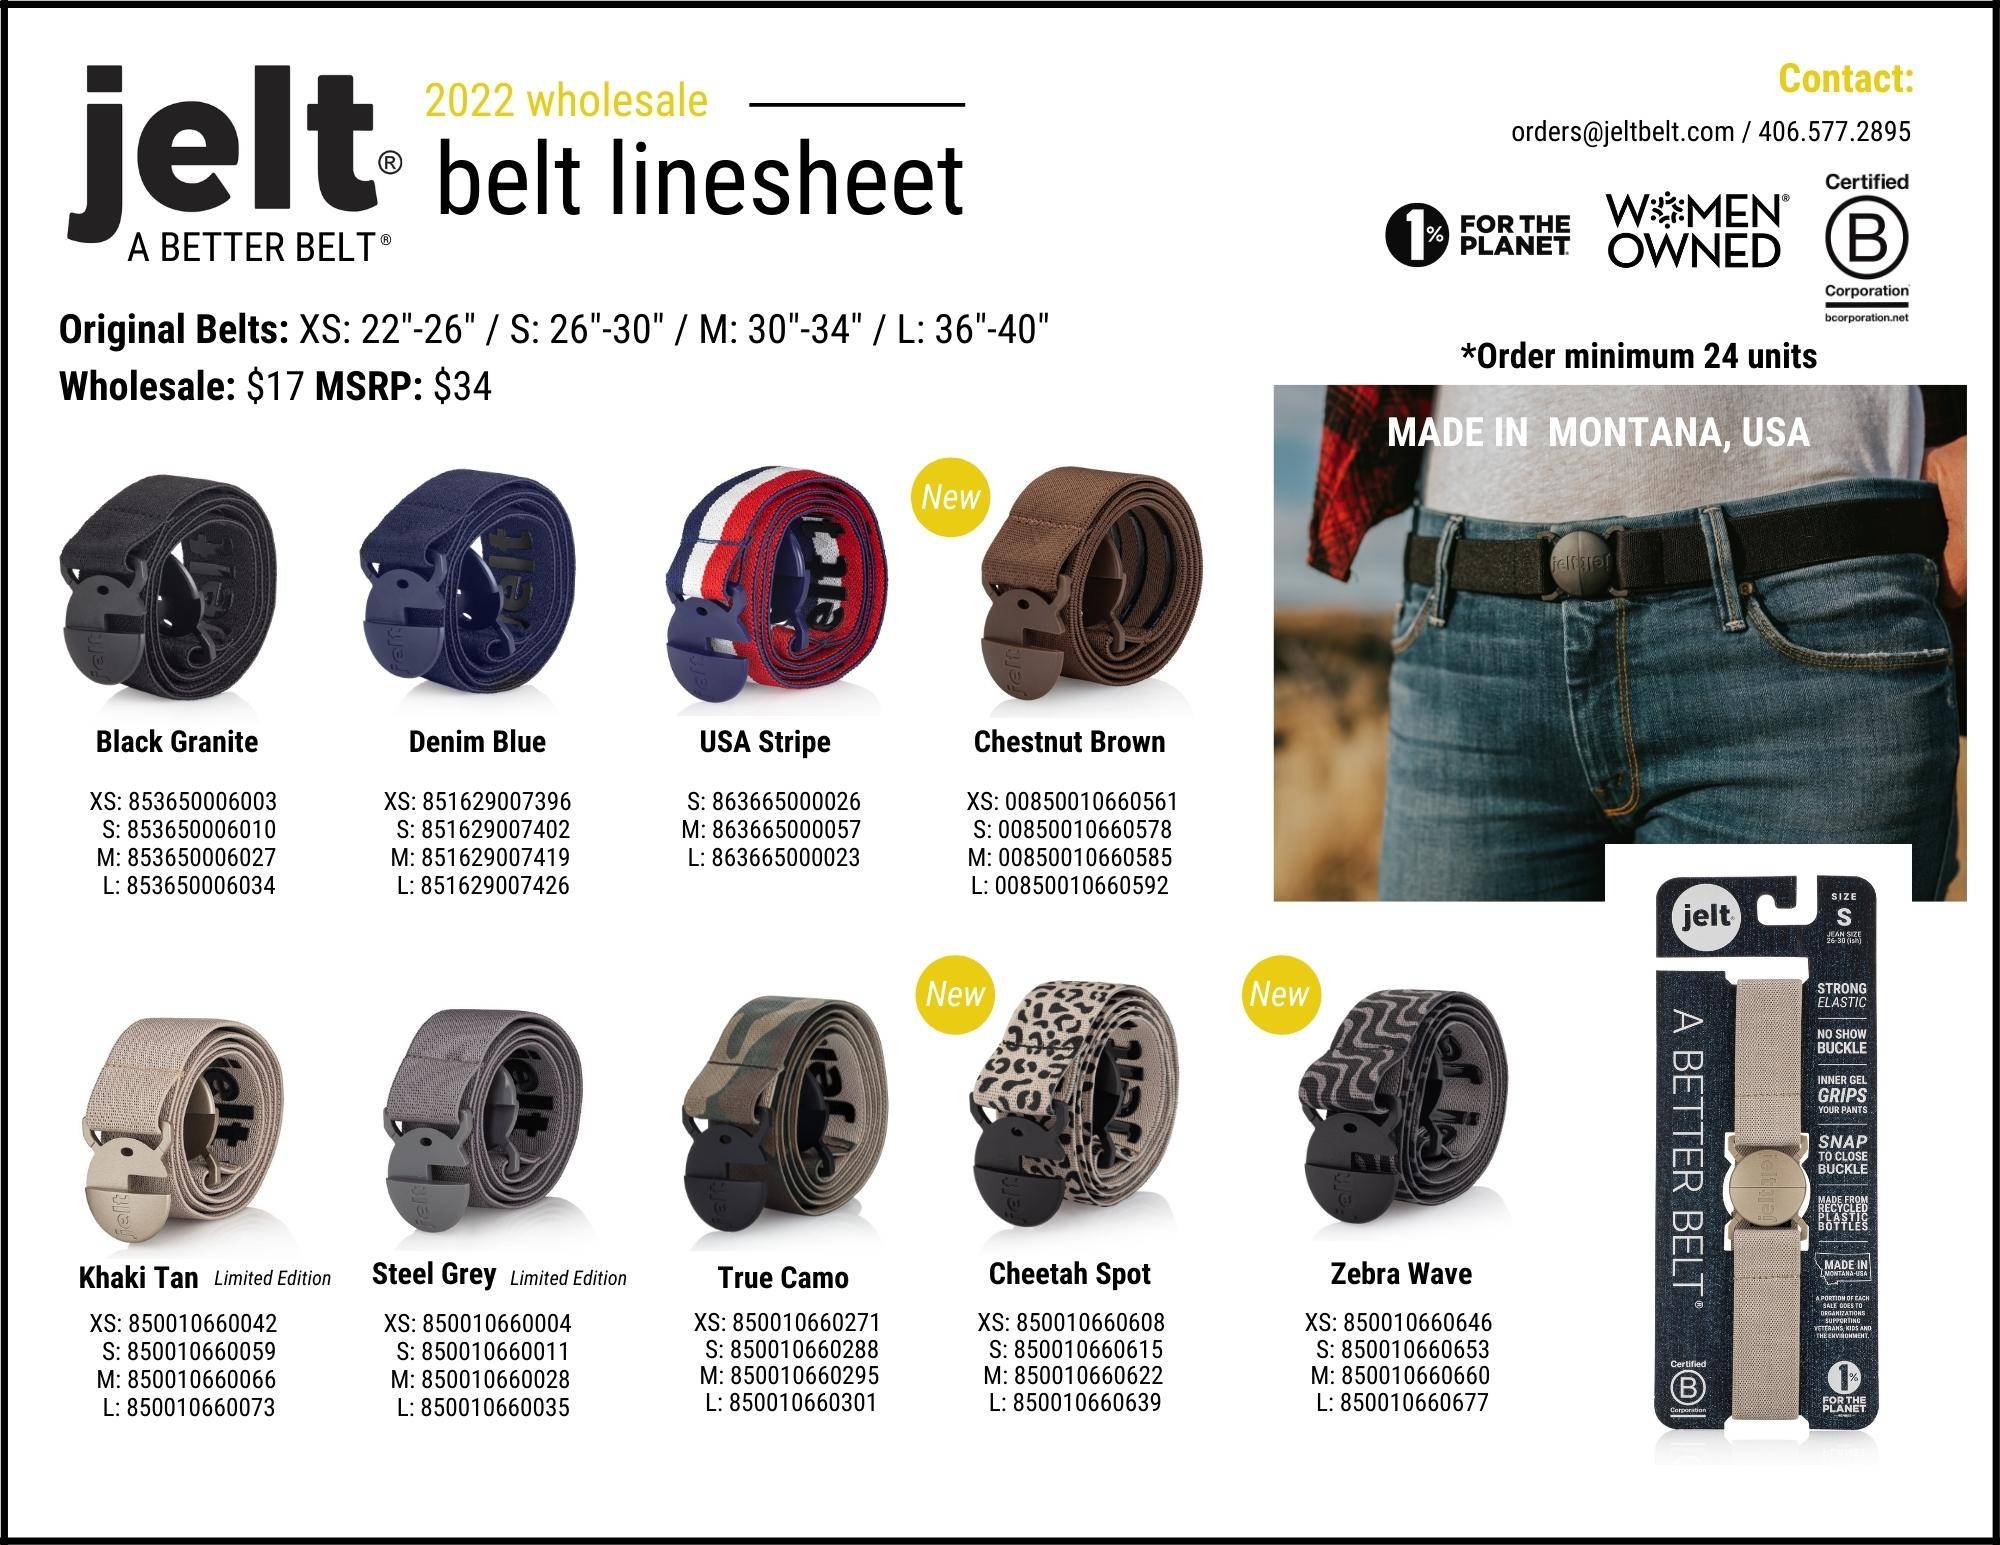 Jelt Wholesale Linesheet - Original Belt Collection